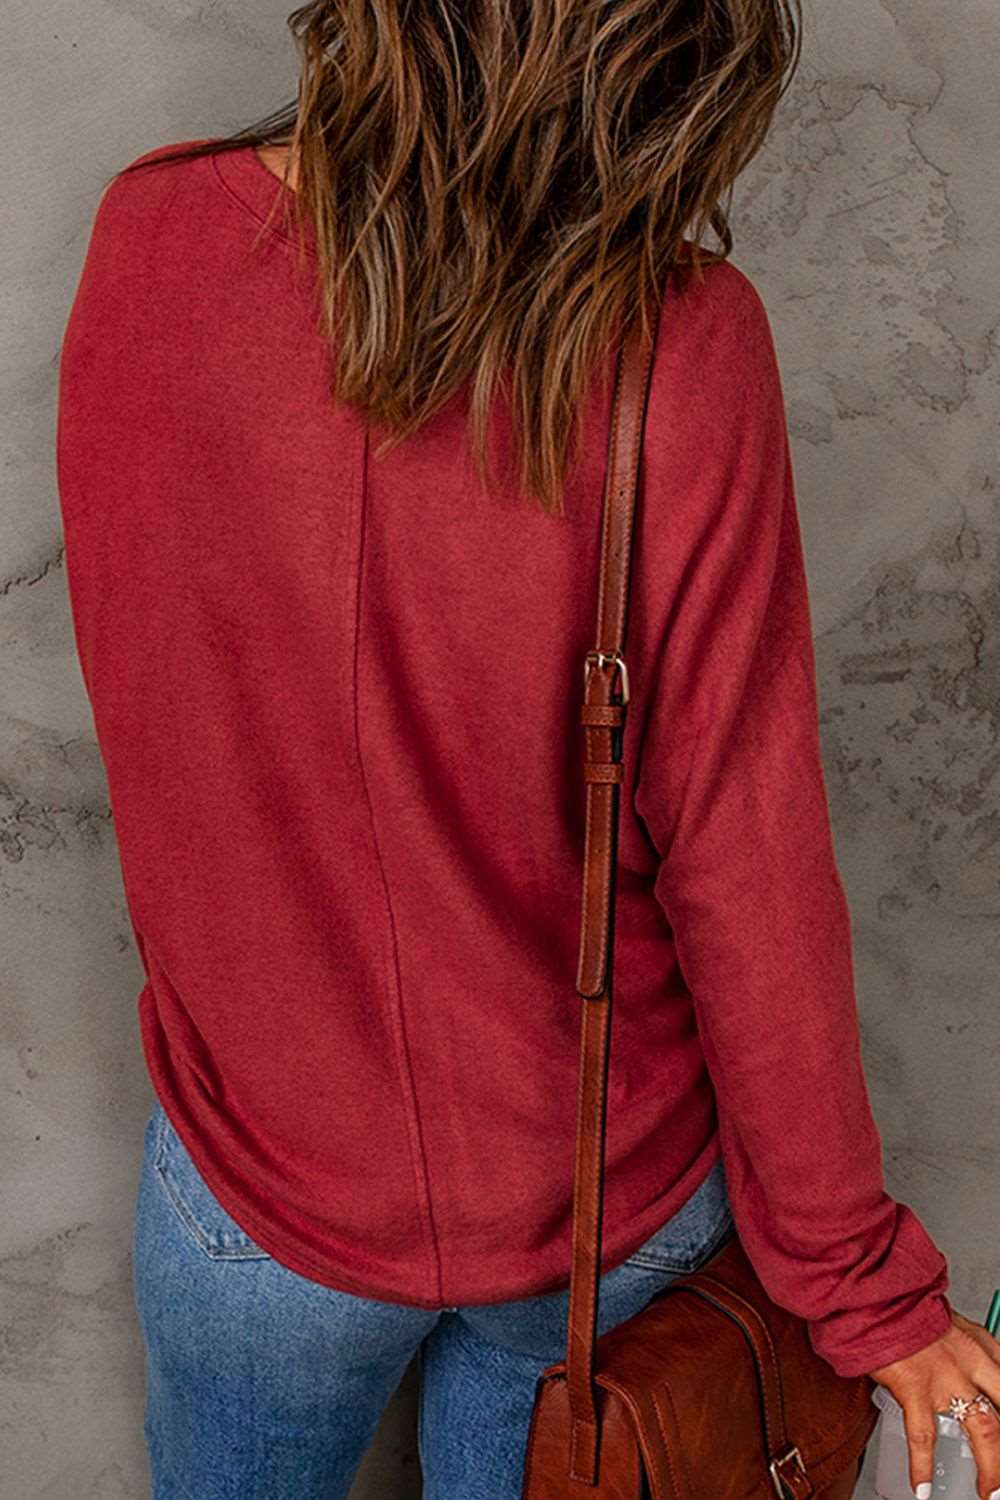 A Seam Detail Long Sleeve Top